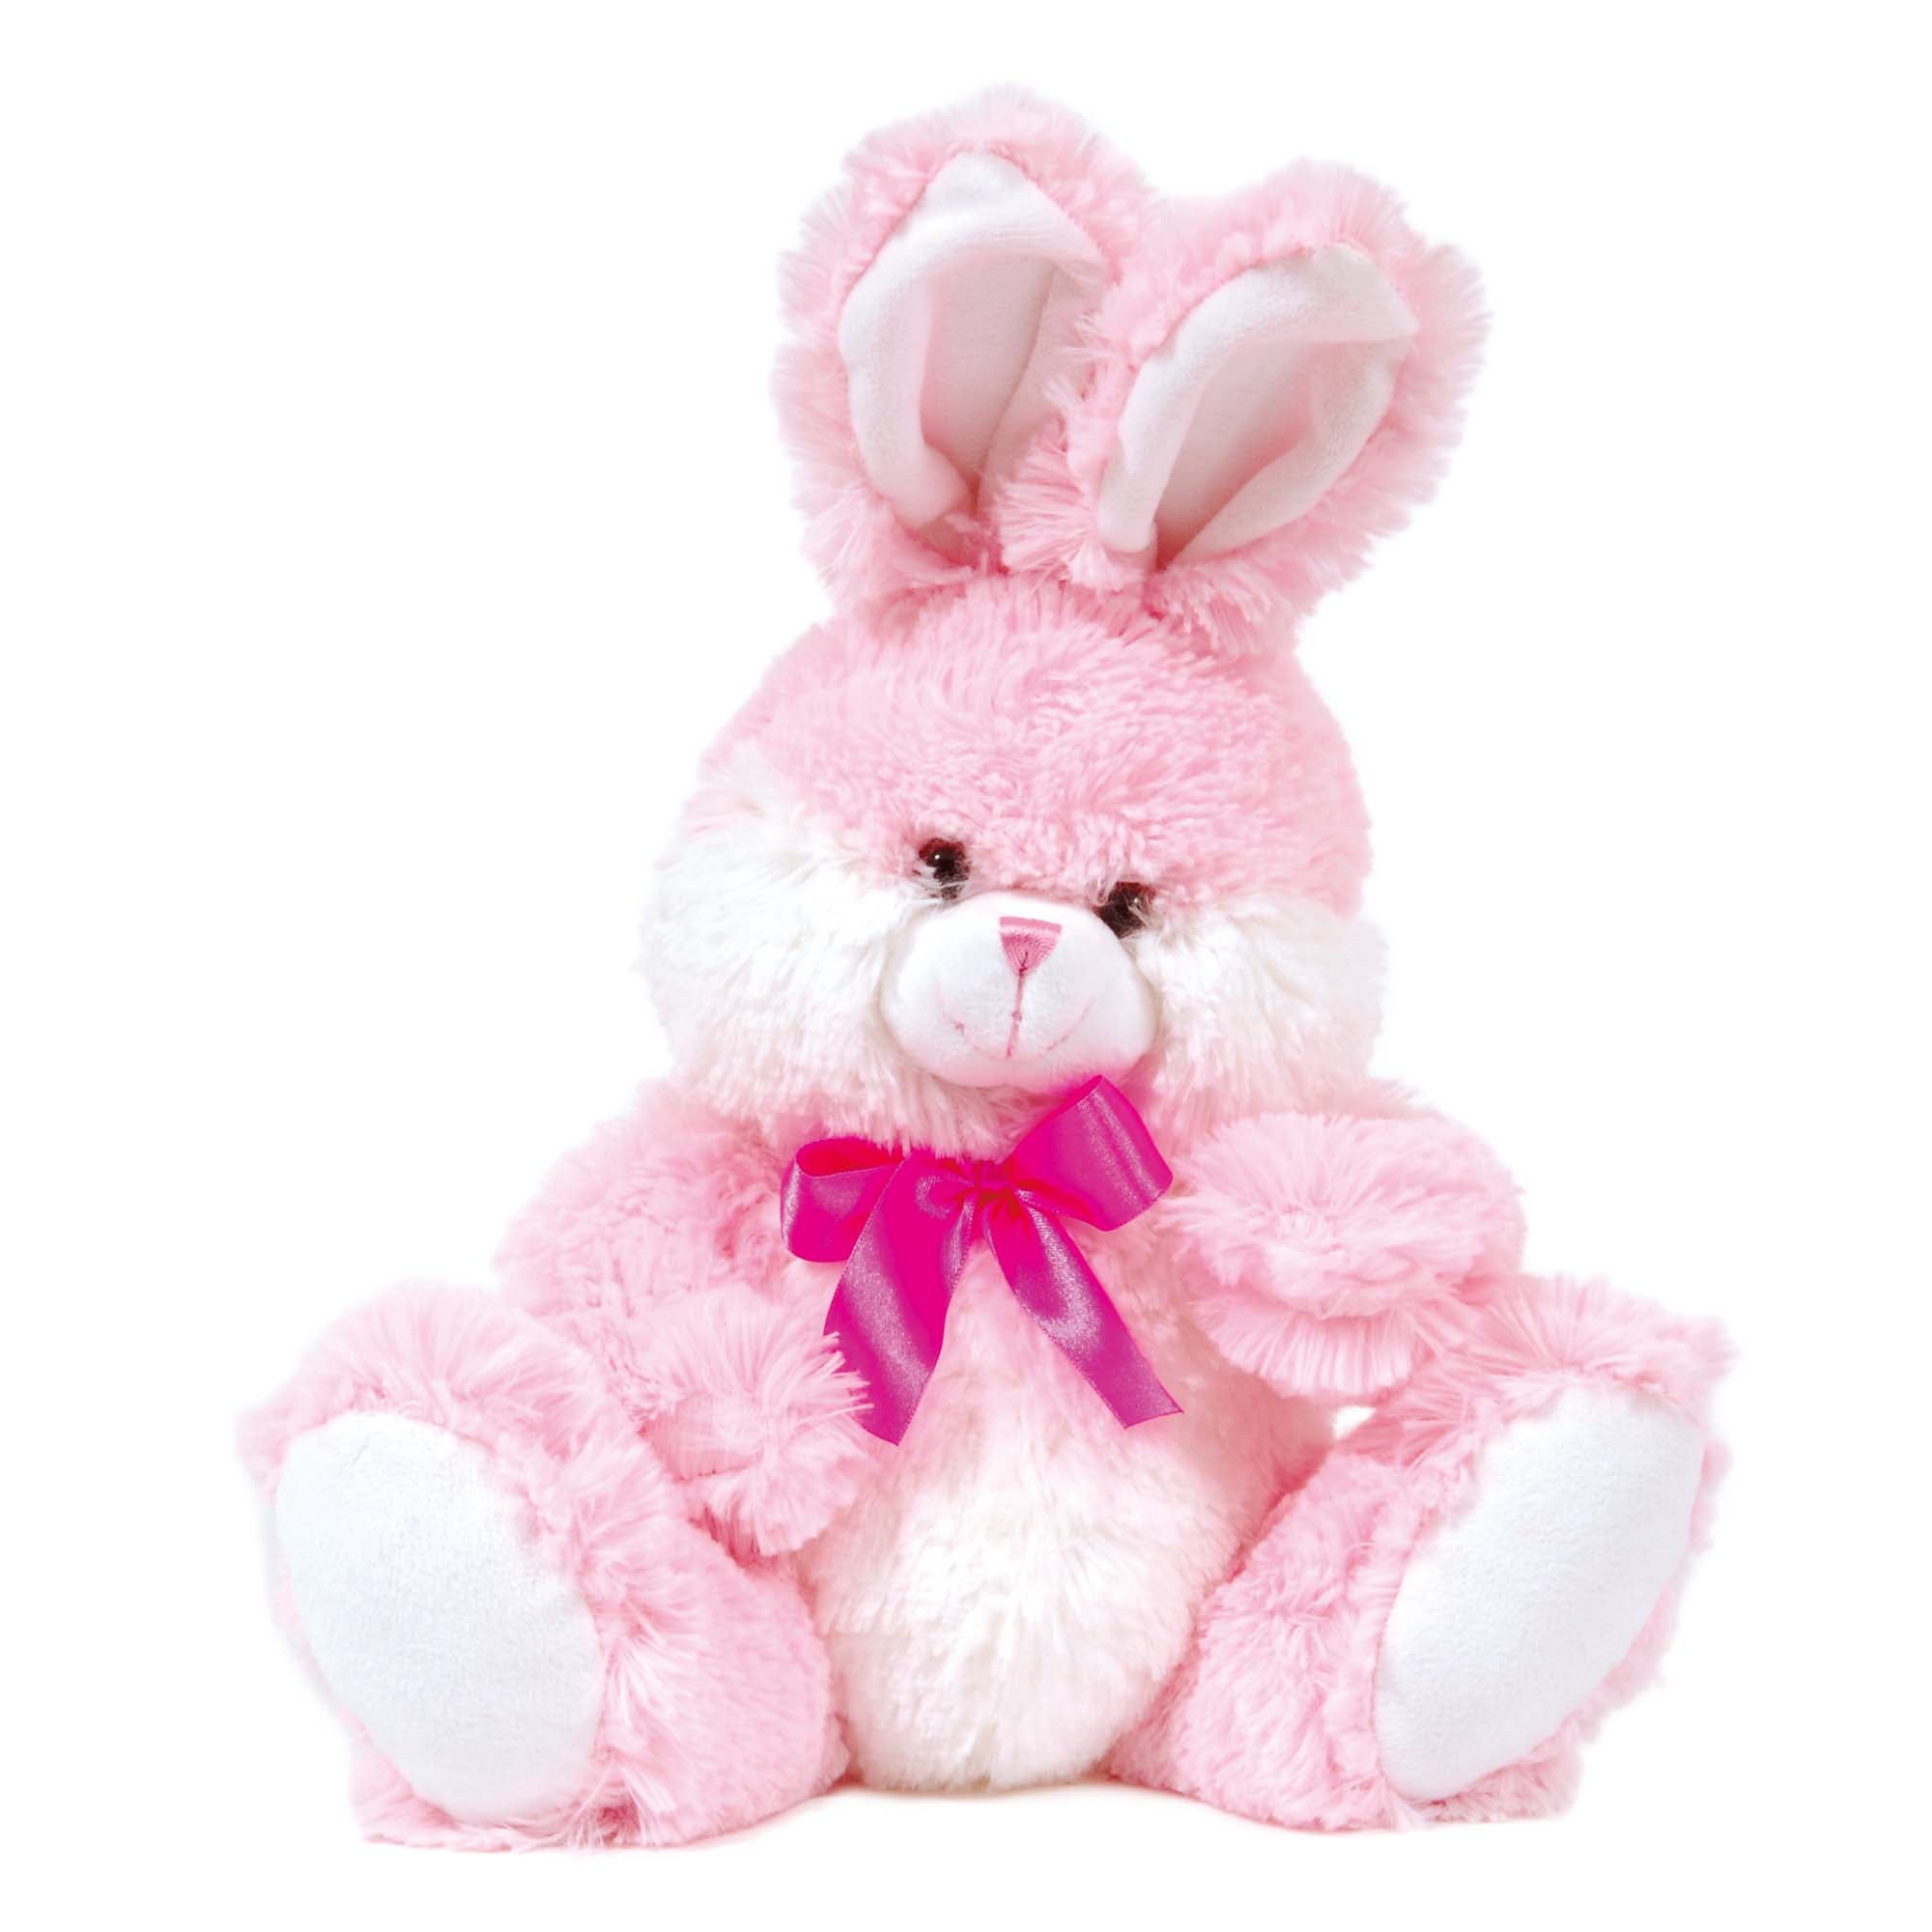 Spring Bunny Plush - Pink